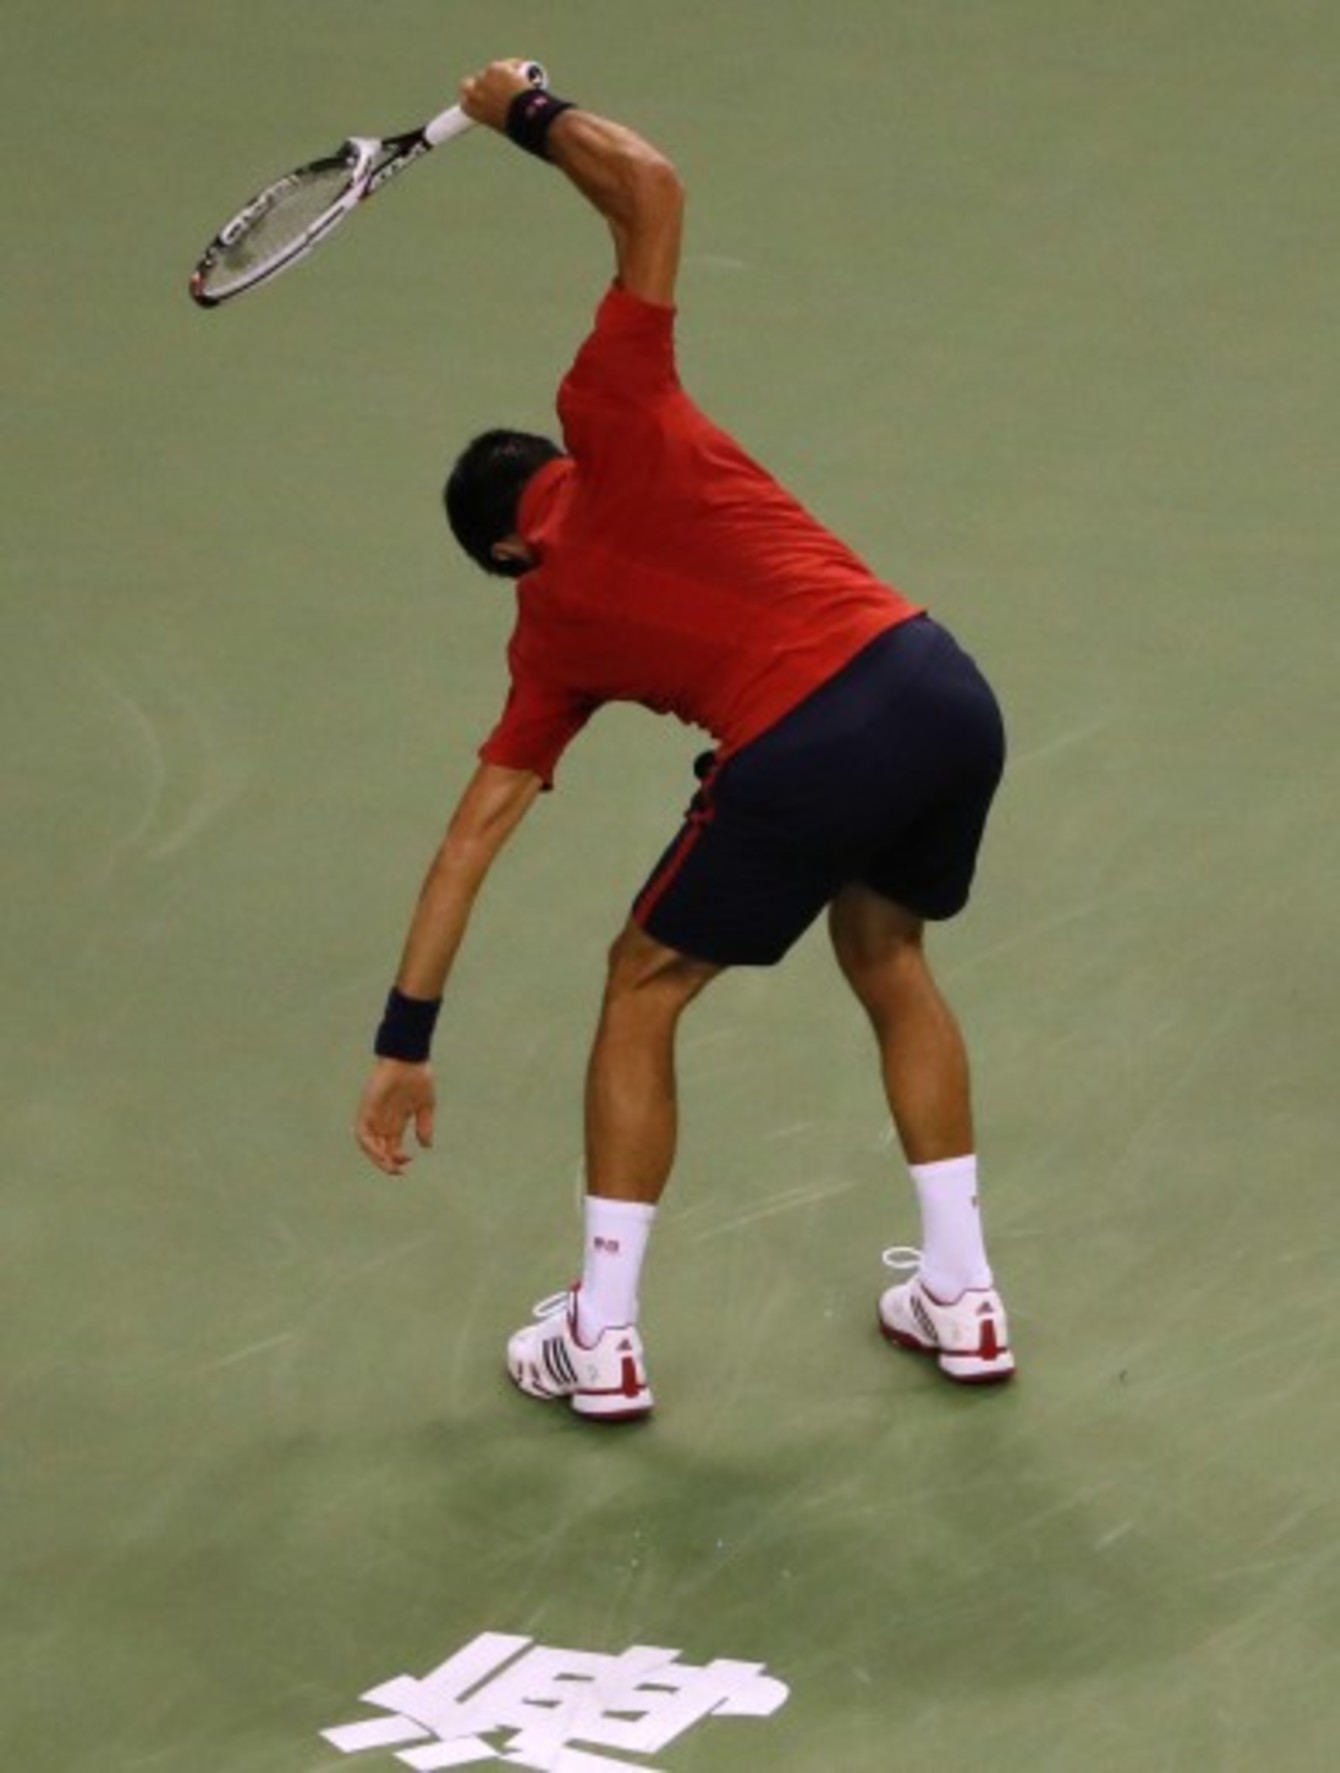 Raging Djokovic smashes racket and rips shirt en route to shock